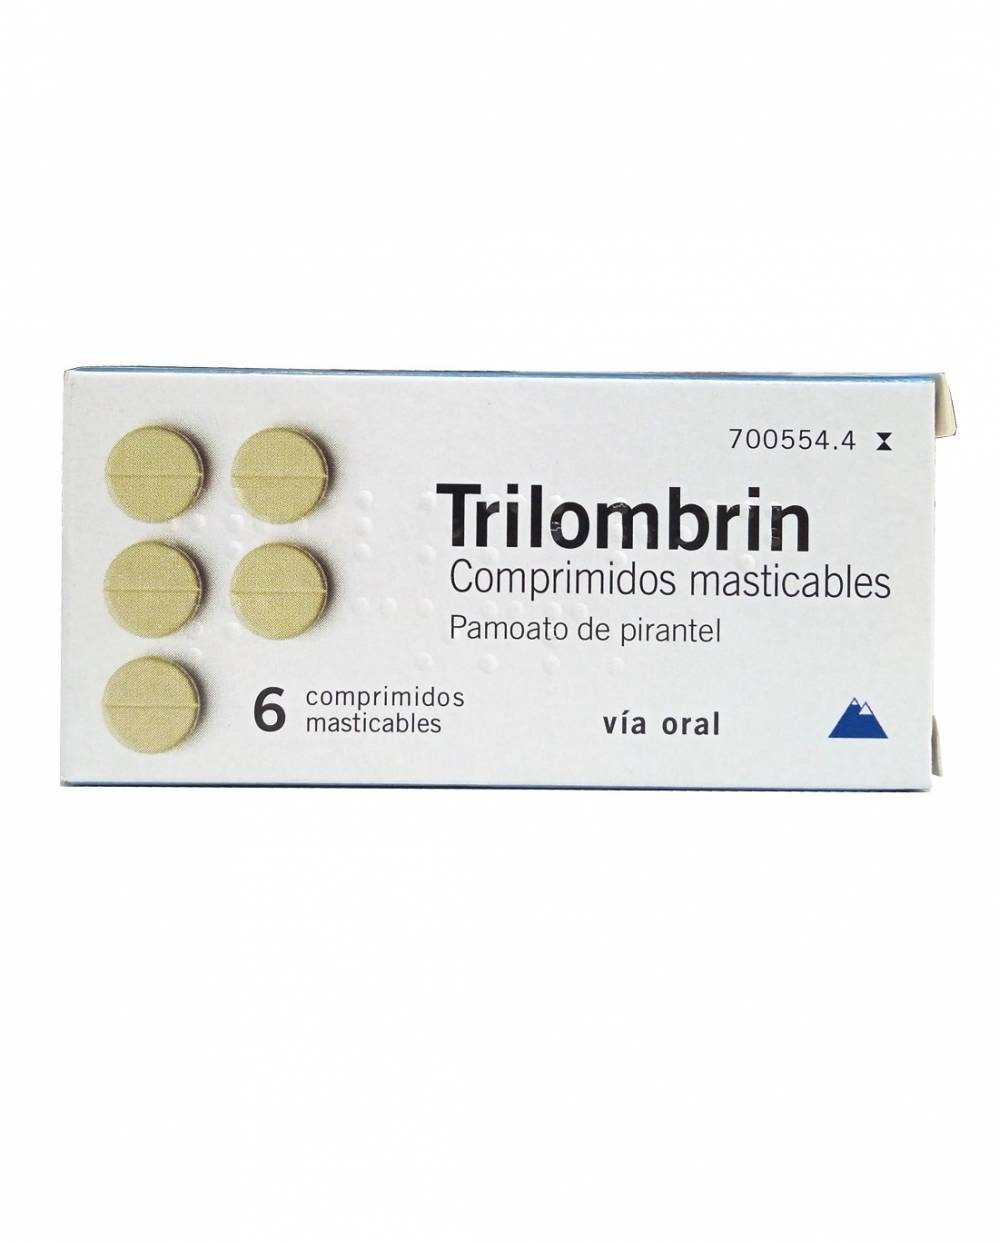 Trilombrin - 6 comprimidos masticables